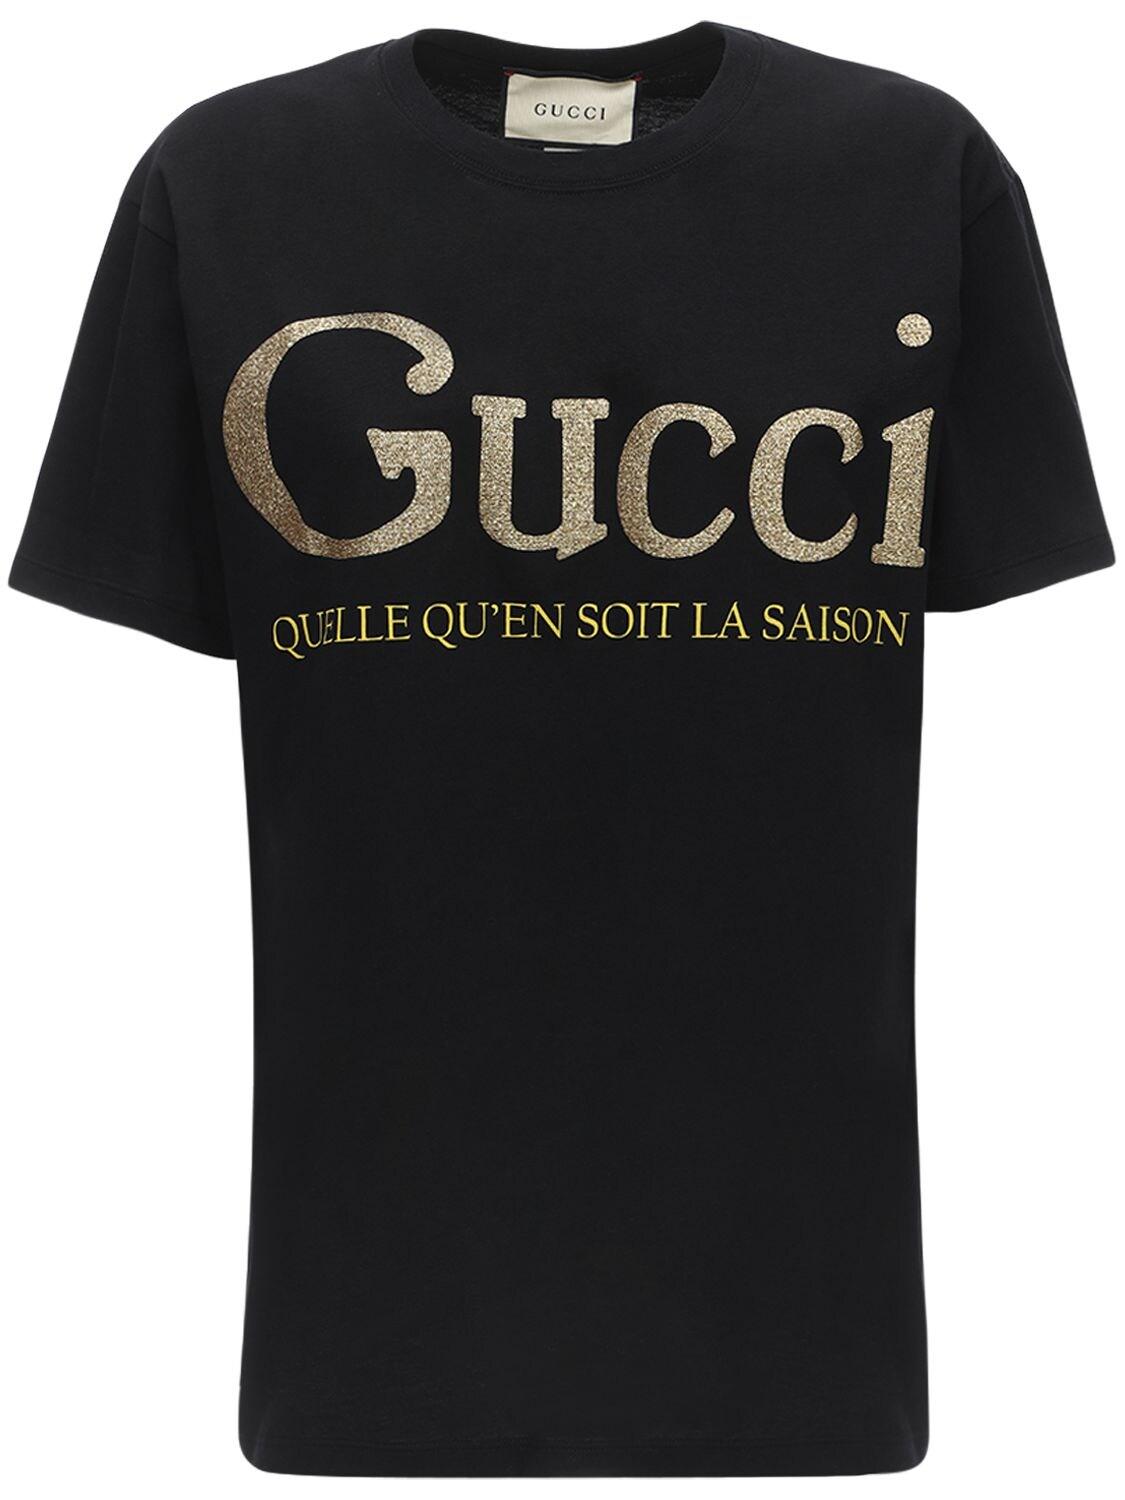 Gucci Cotton Slogan T-shirt in Black/Gold (Black) - Save 21% - Lyst